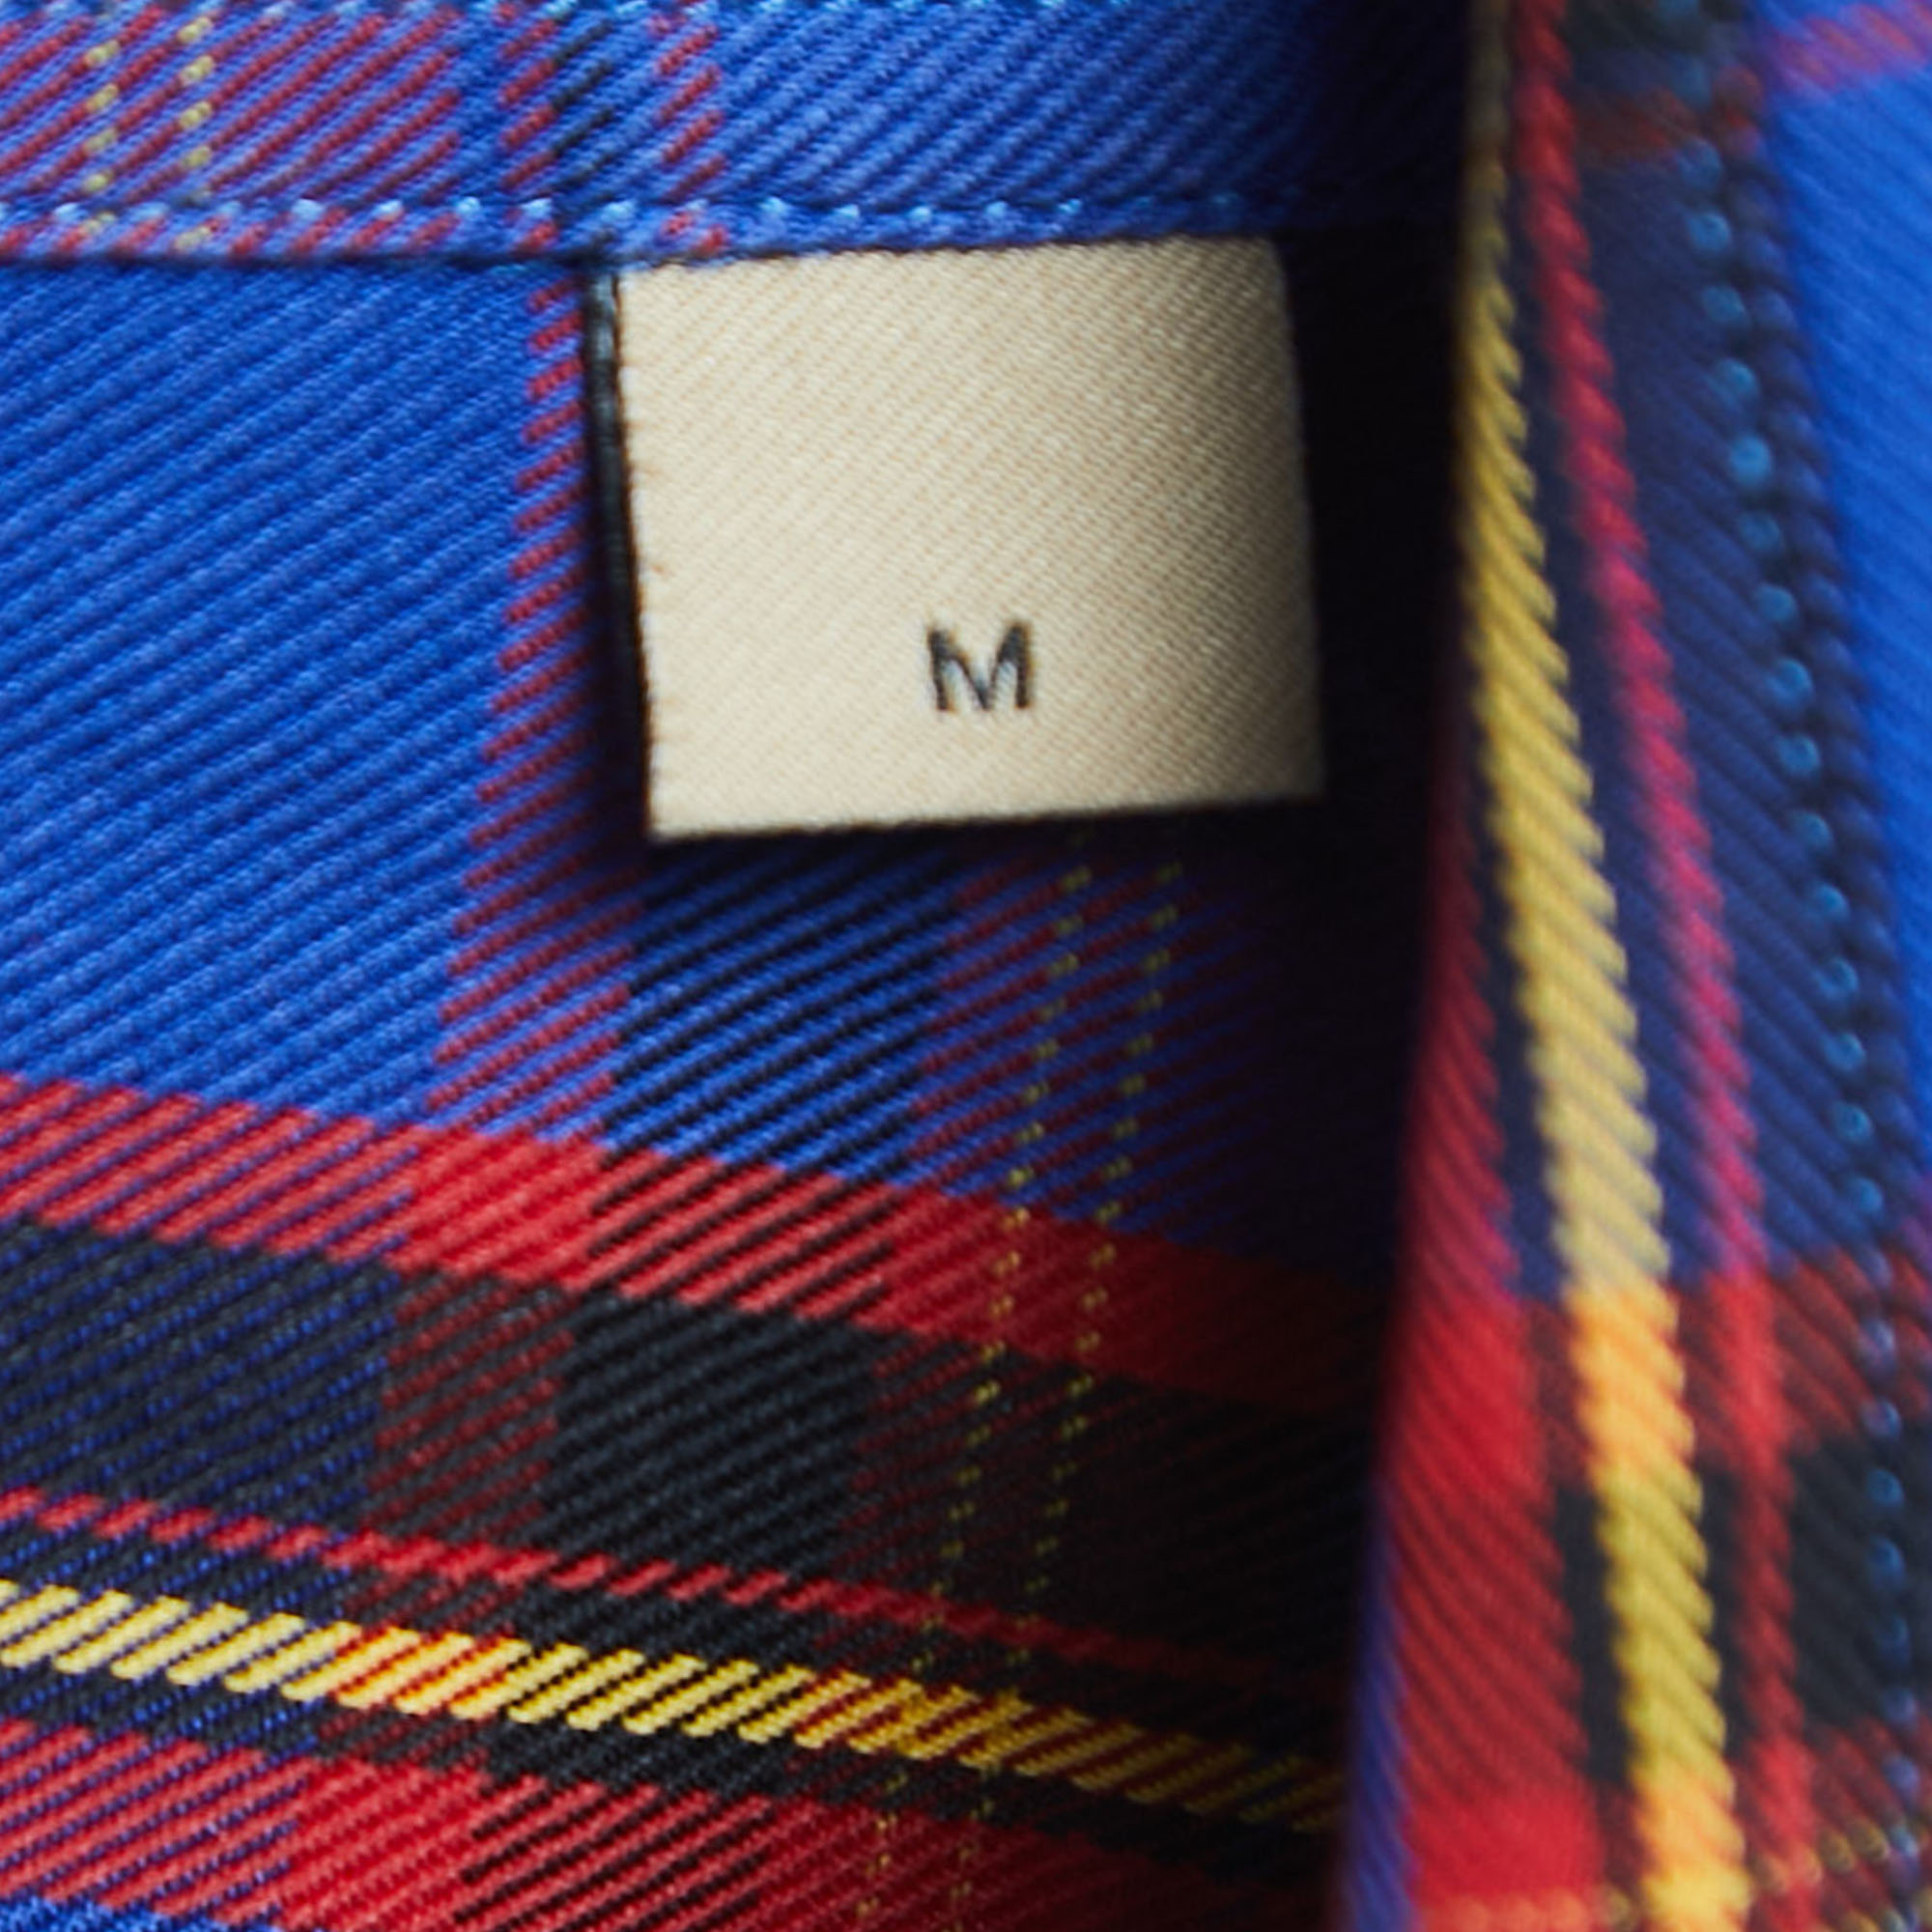 Burberry Blue Checked Cotton Pocket Detail Shirt M